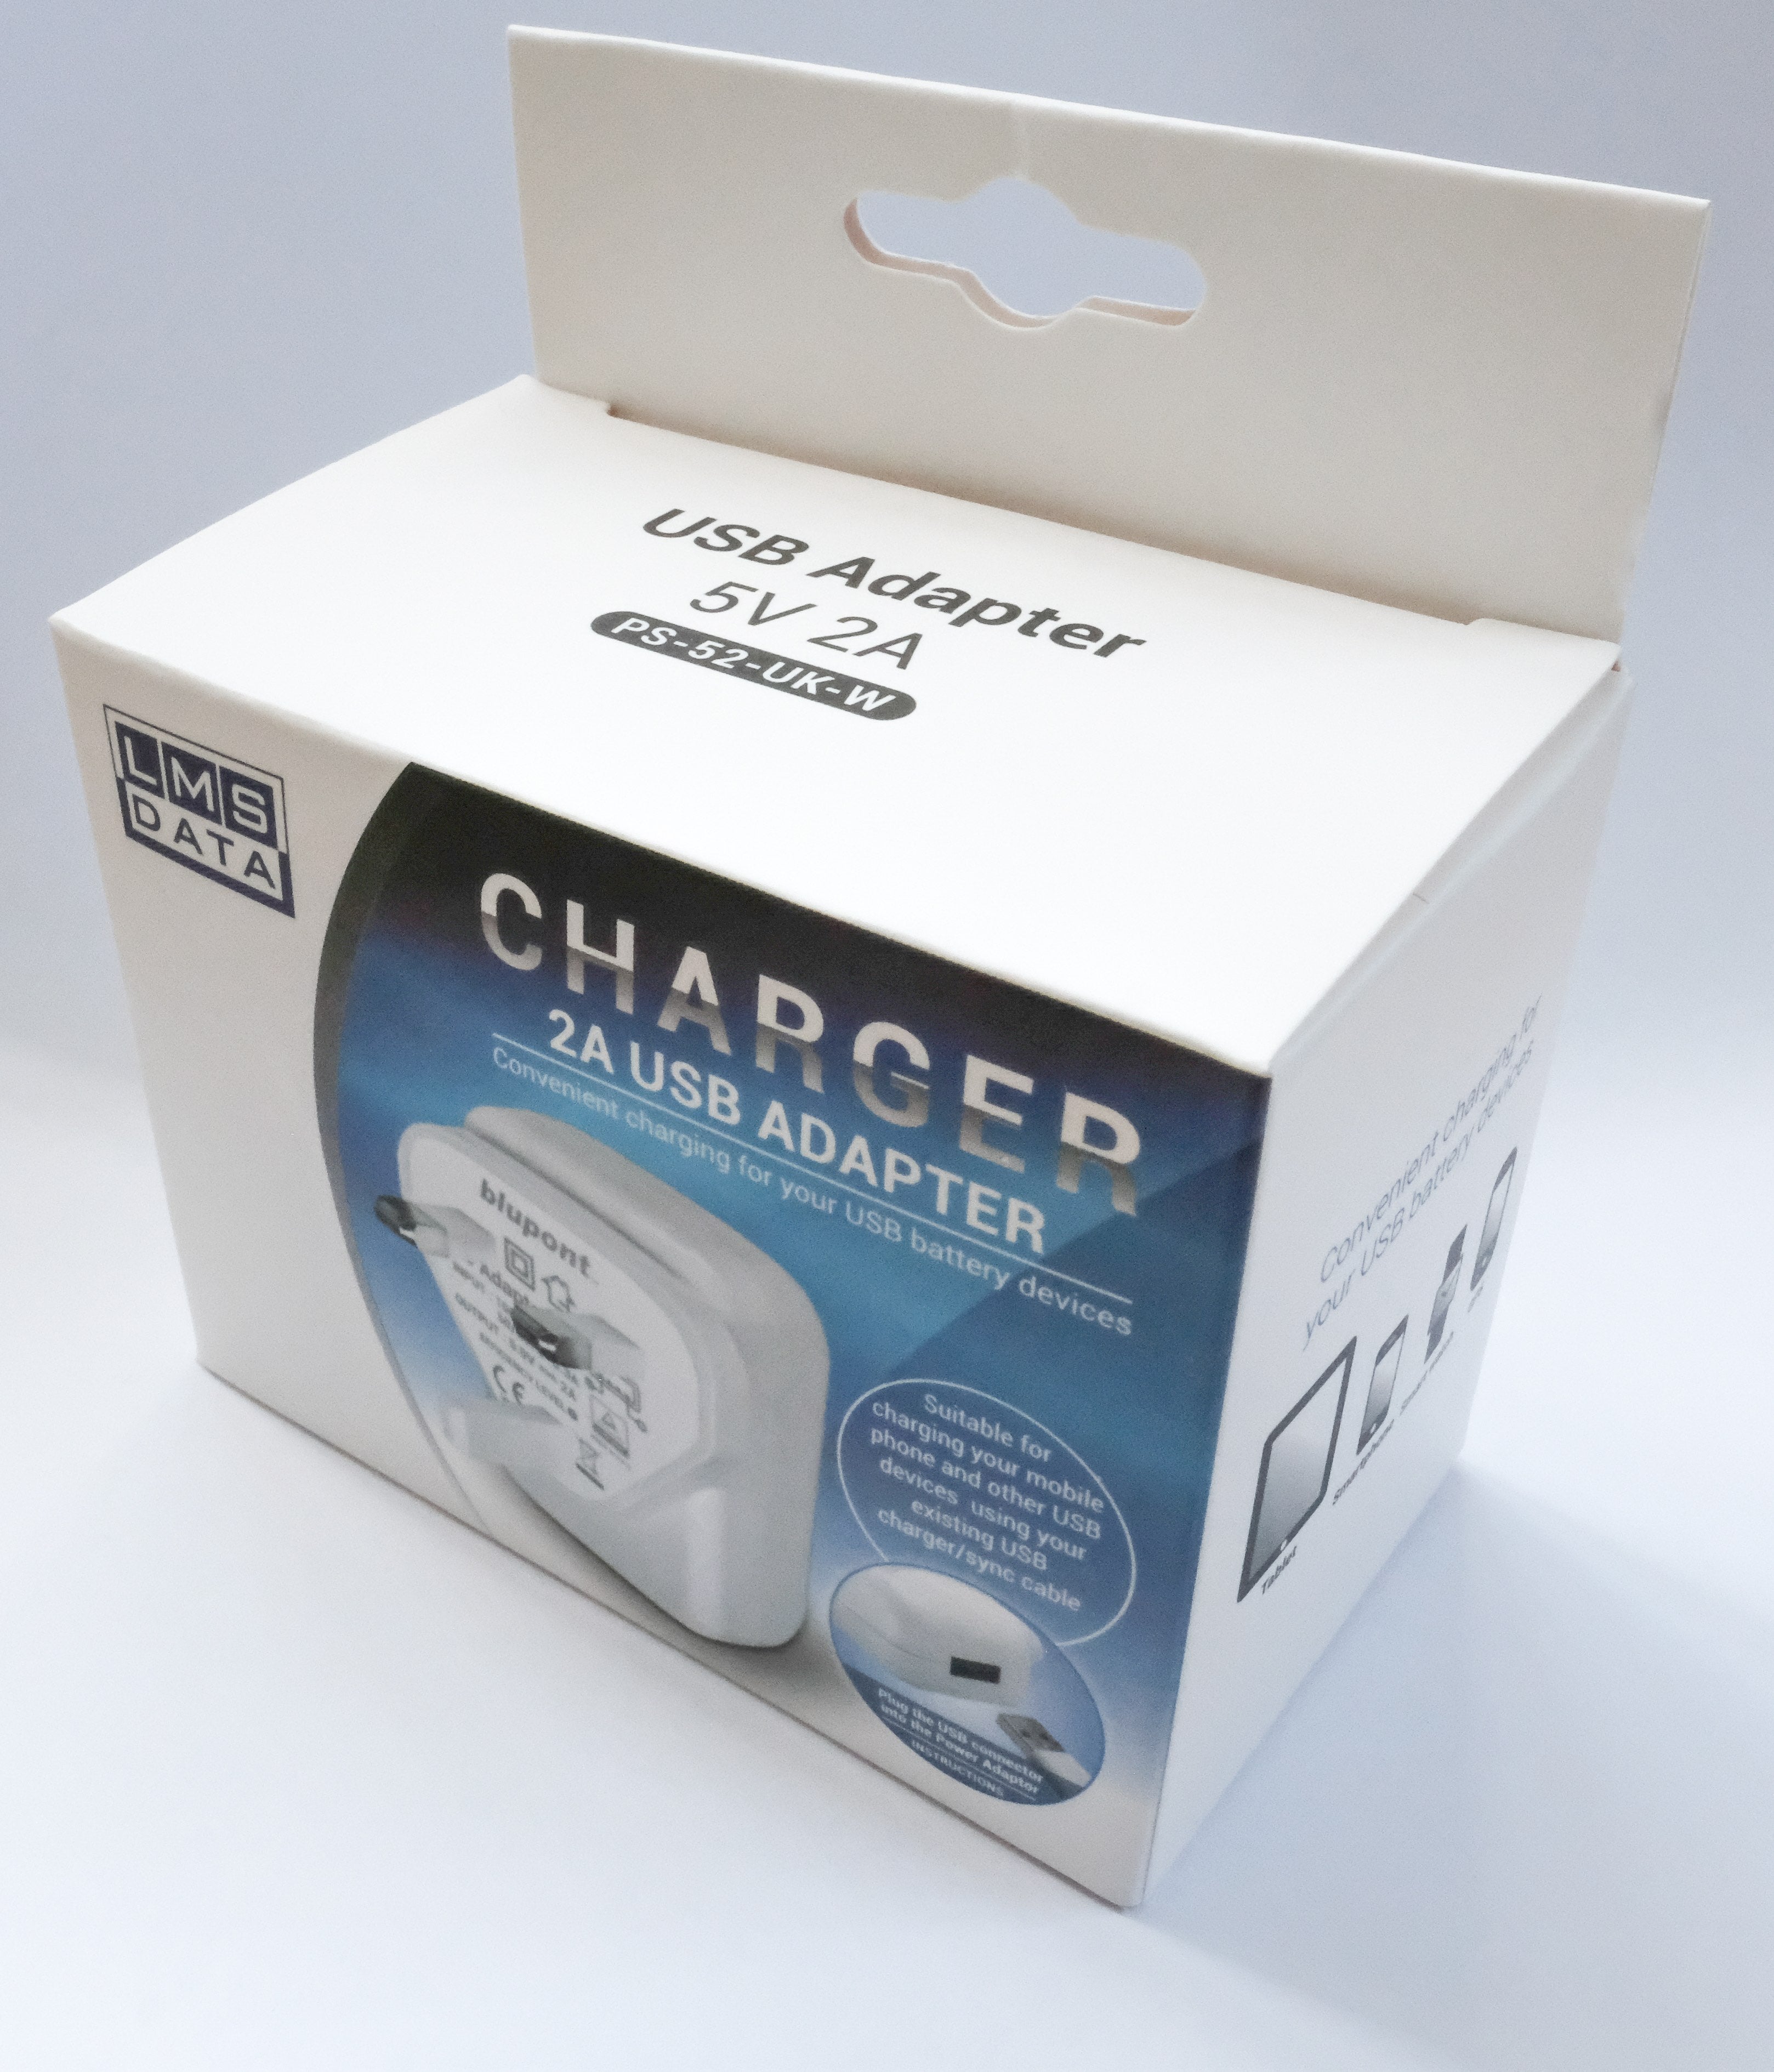 2A USB Power Adaptor & Charger - UK Plug - White - Netbit UK